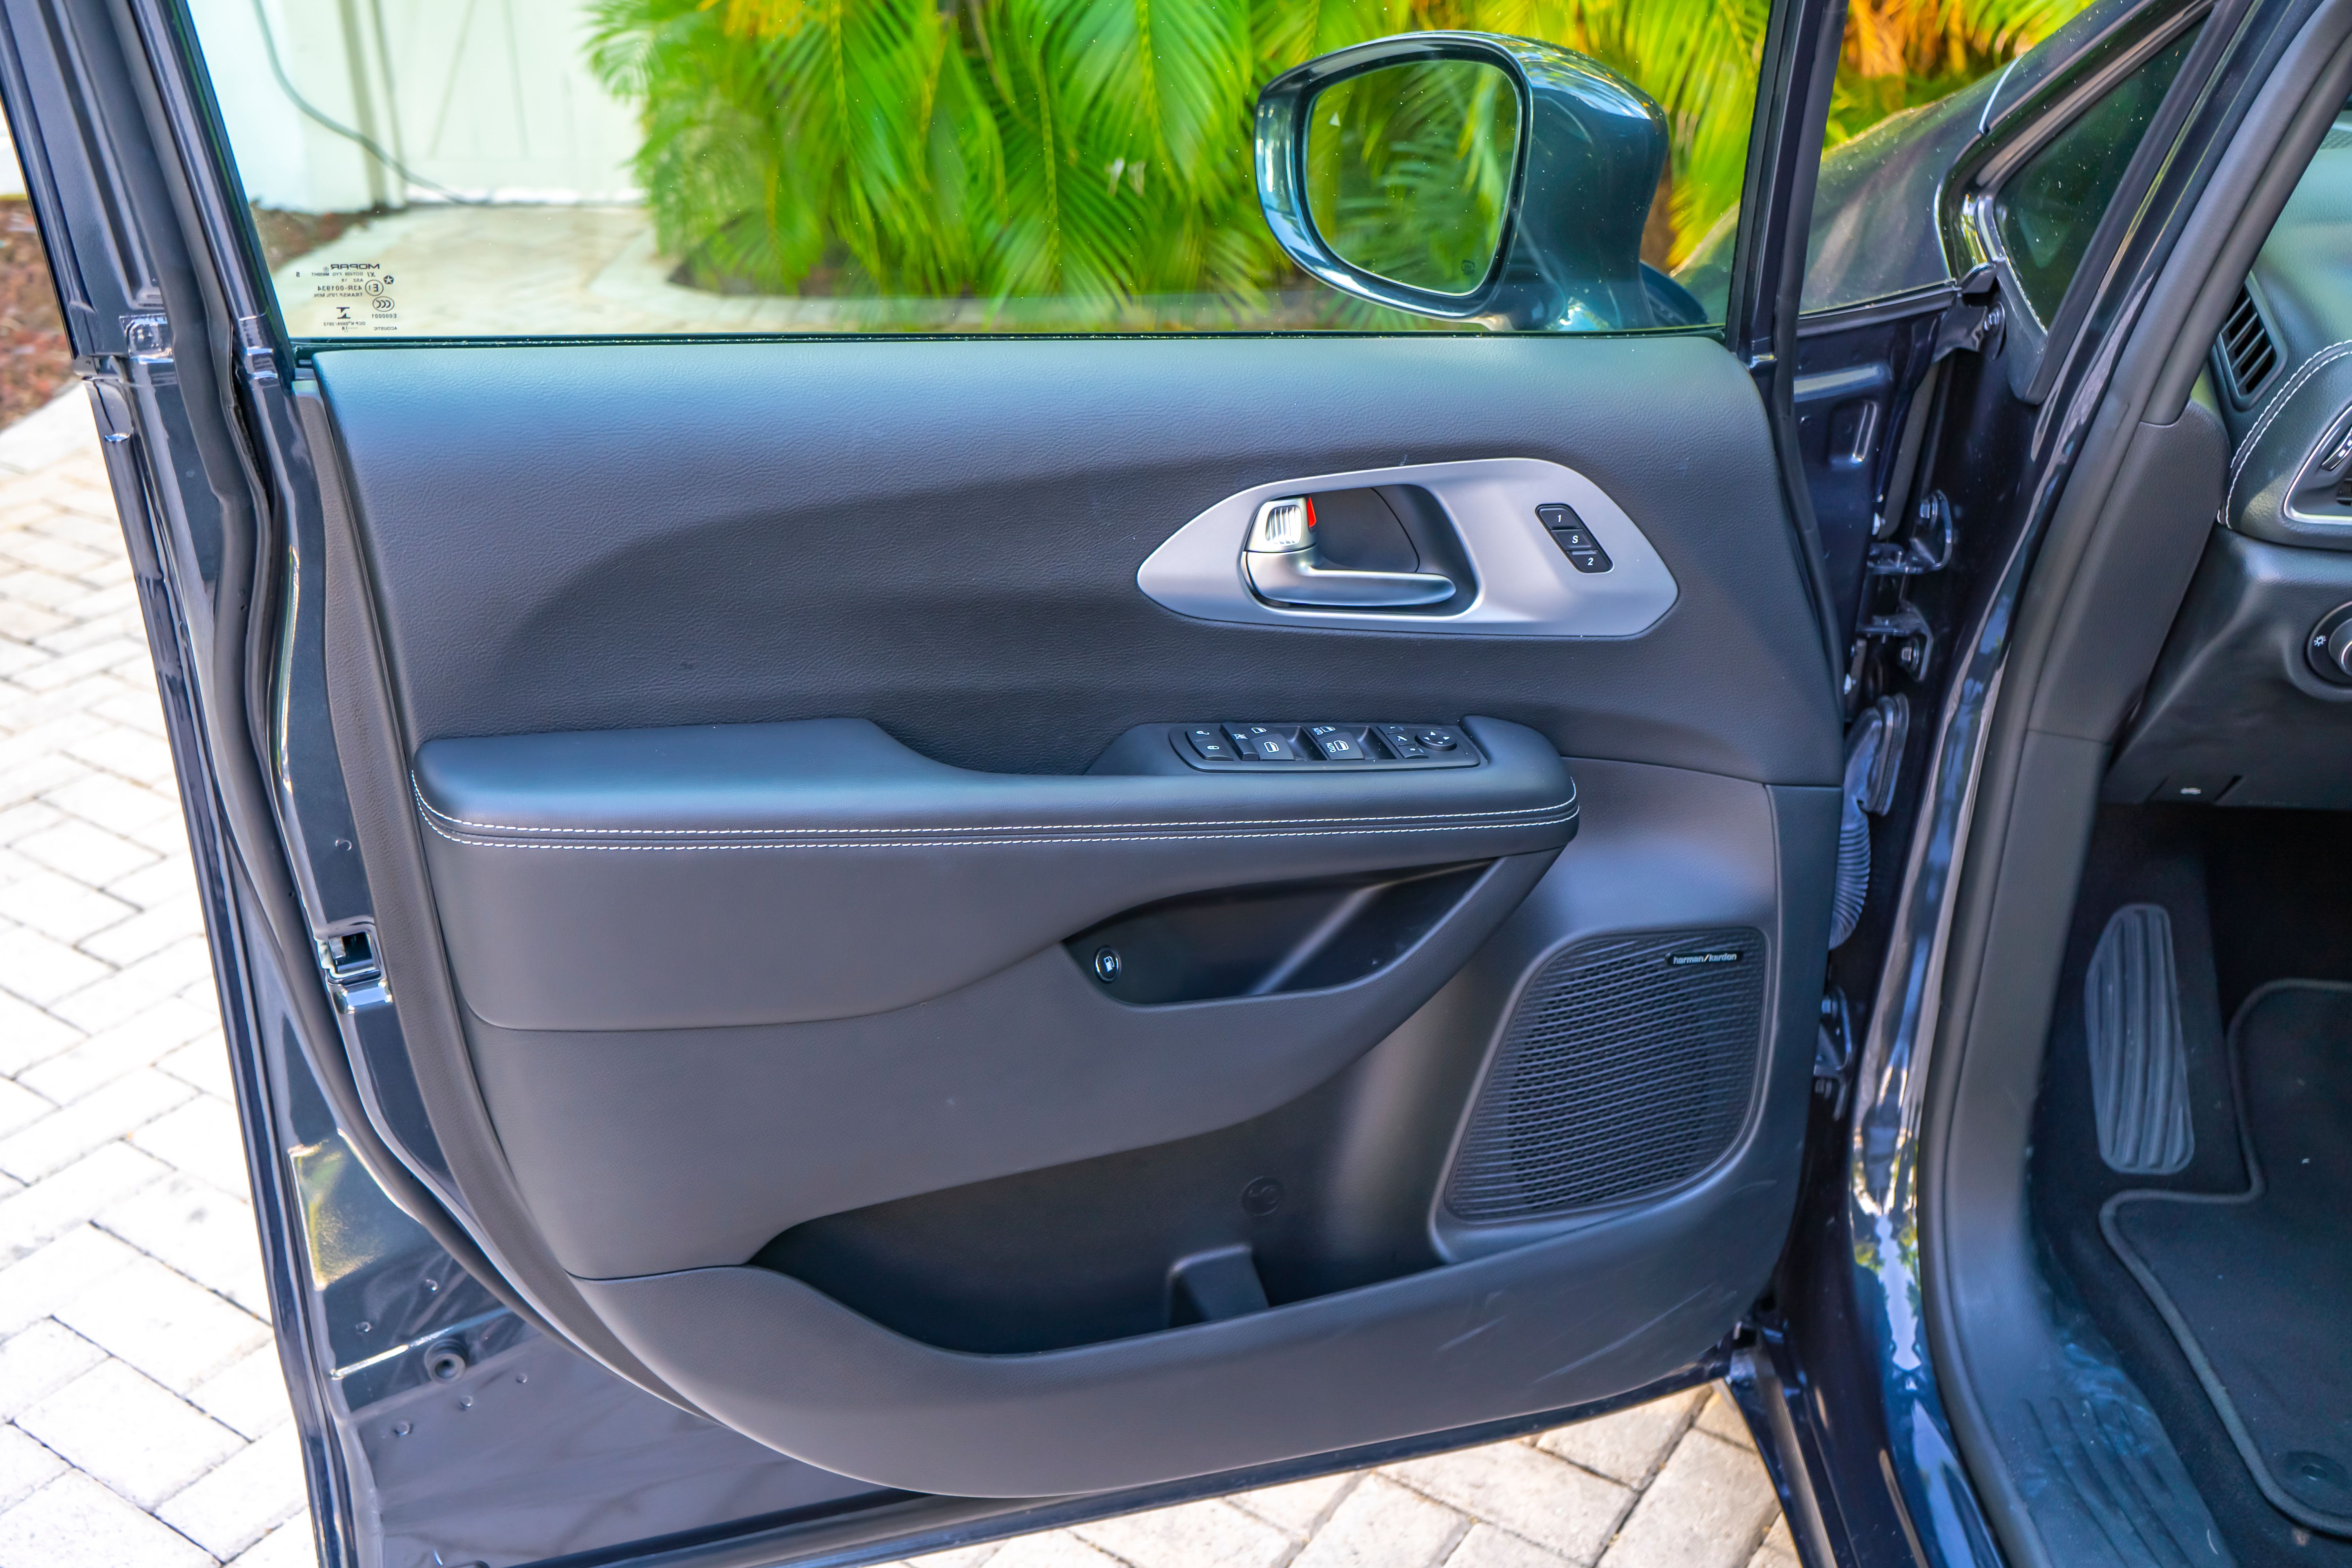 2019 Chrysler Pacifica Hybrid - Driven